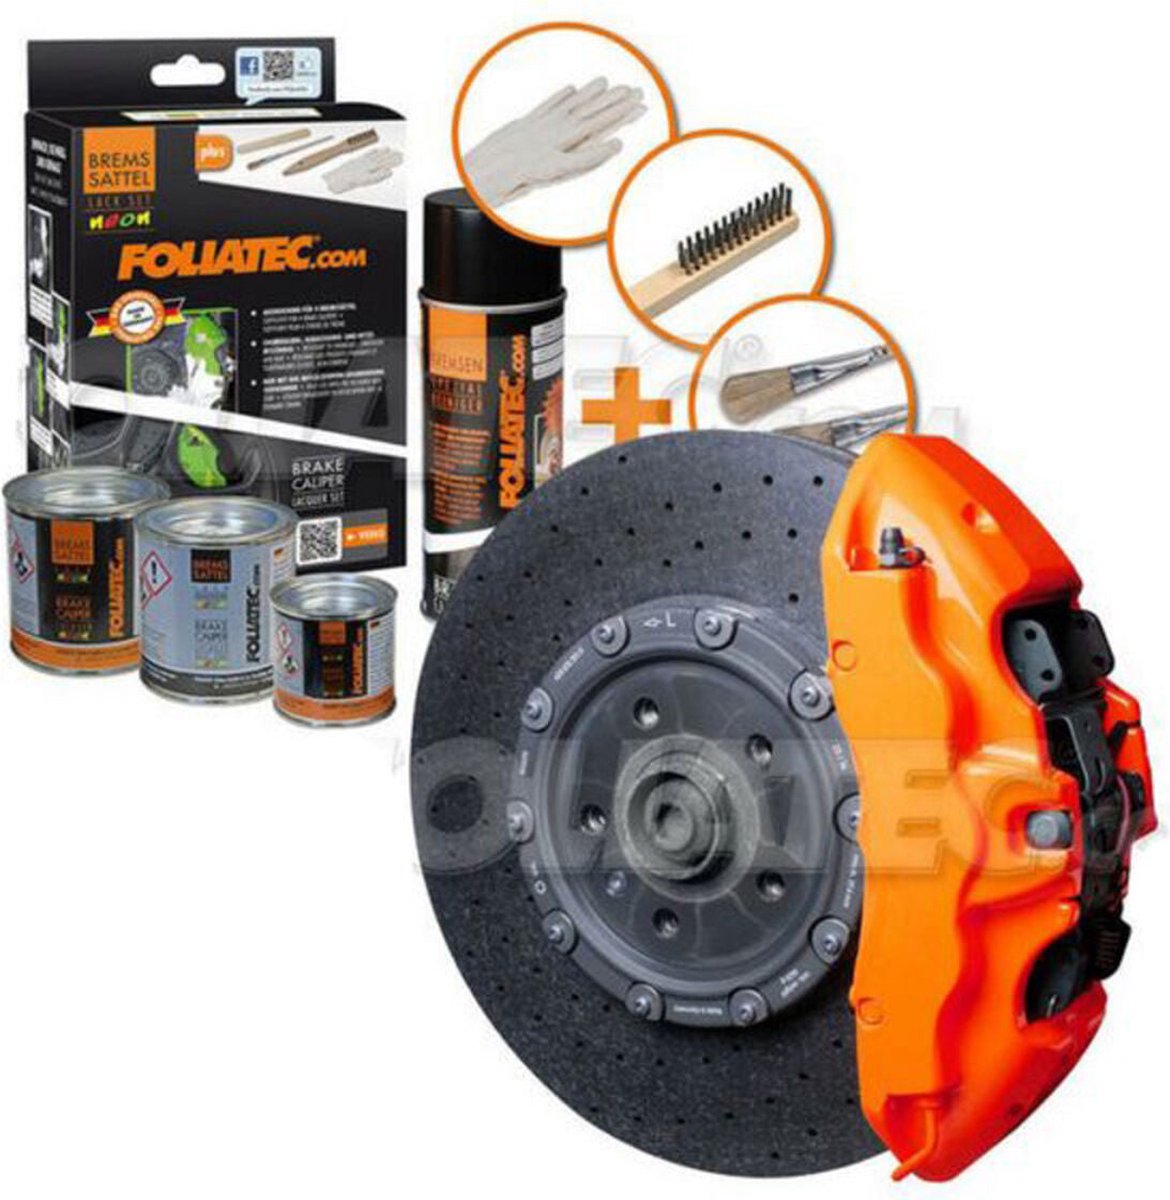  Foliatec - Kit peinture étriers de freins - Orange (neon  orange), Ref: 2183